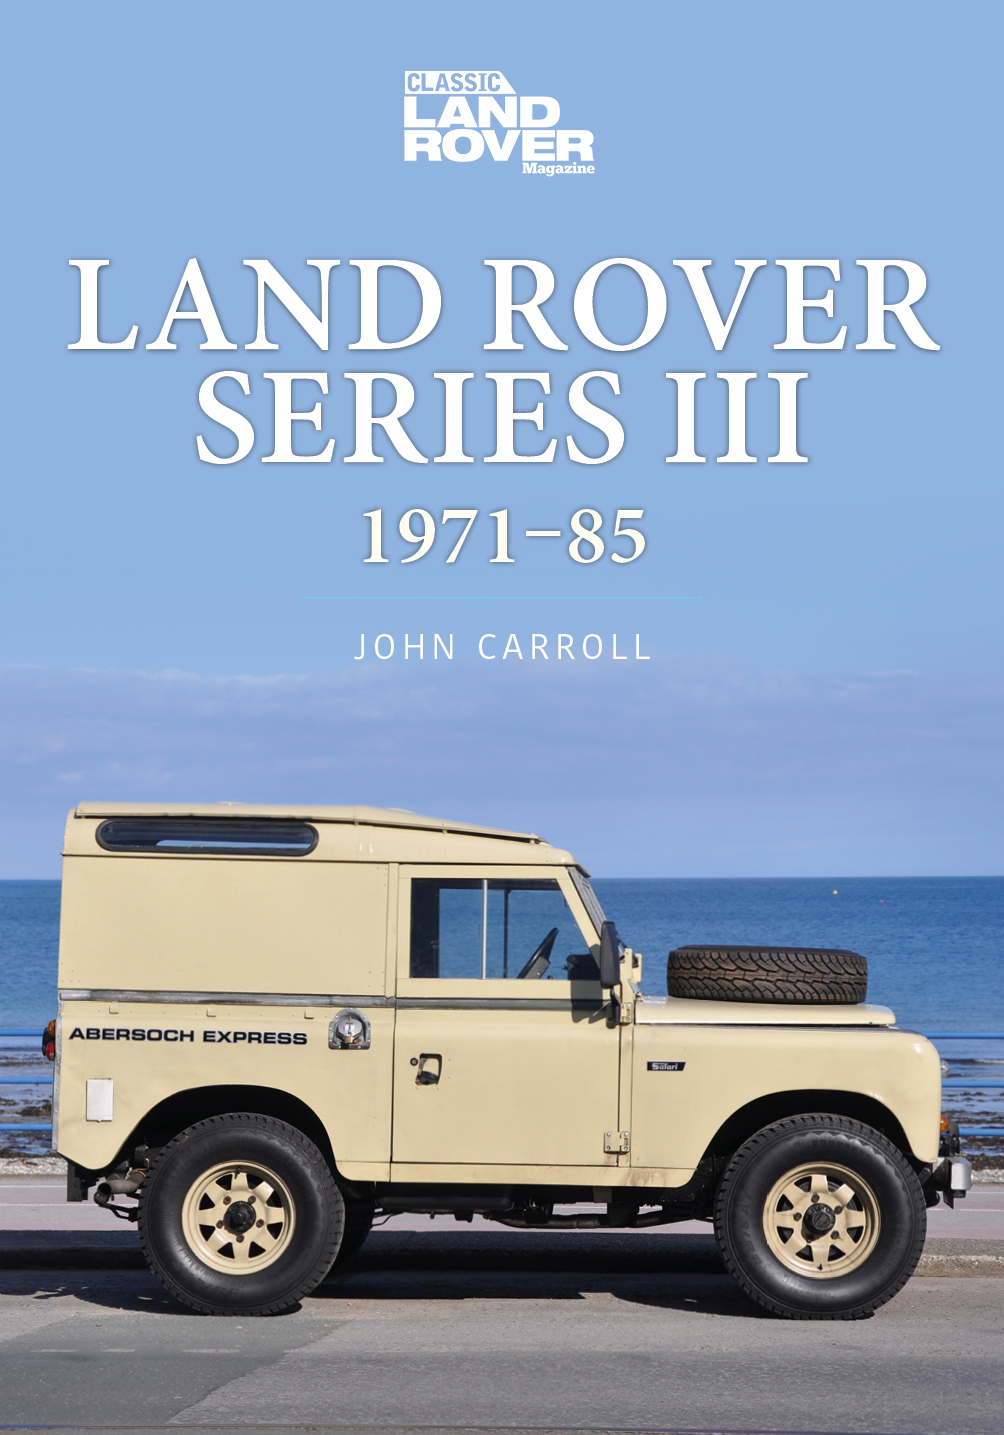 Land Rover Series III - 15-24.99